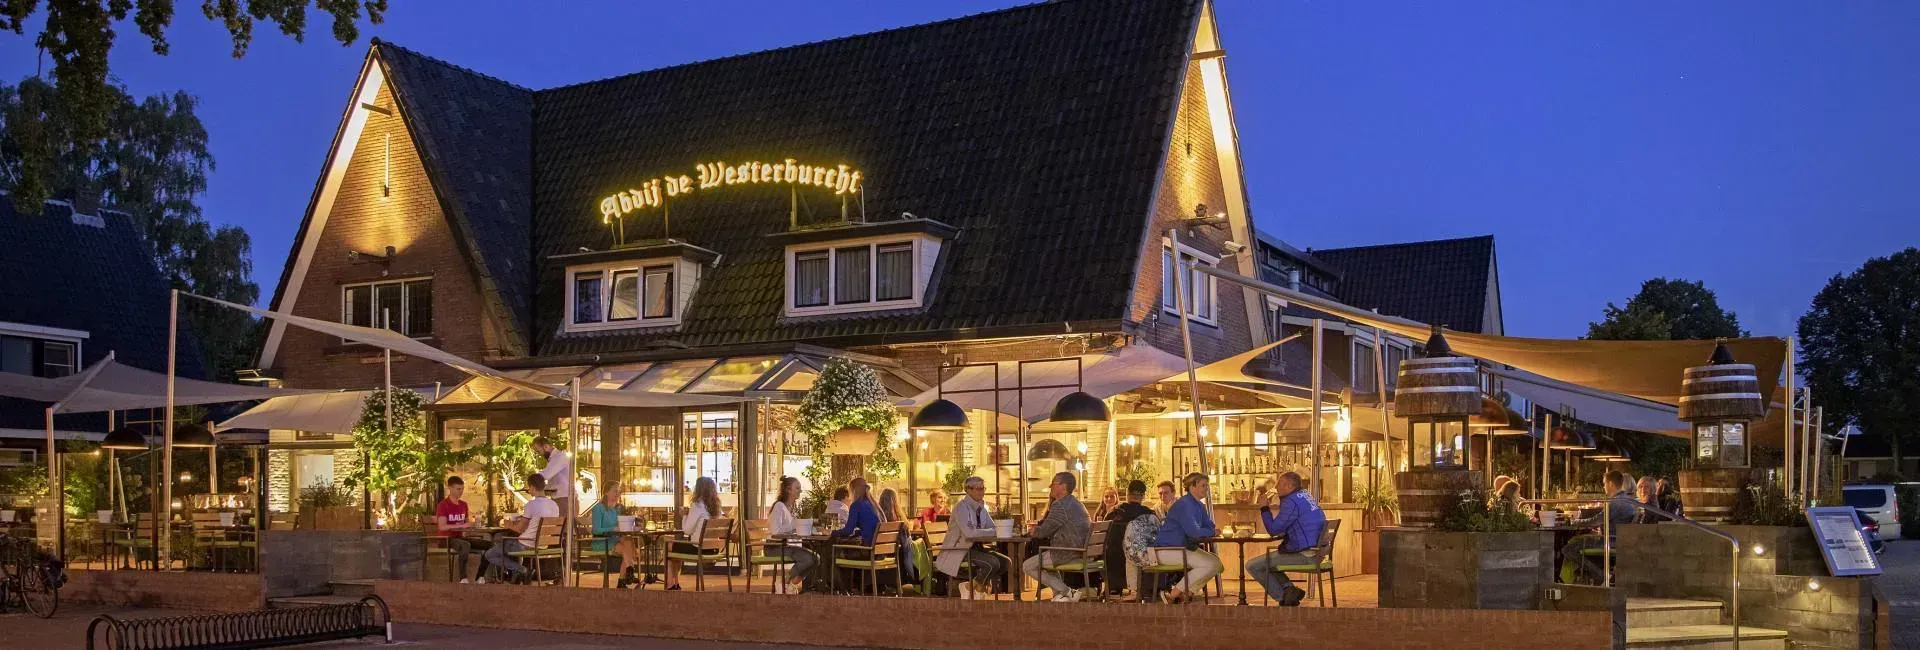 Hotel & Restaurant in the beautyfull of Westerbork